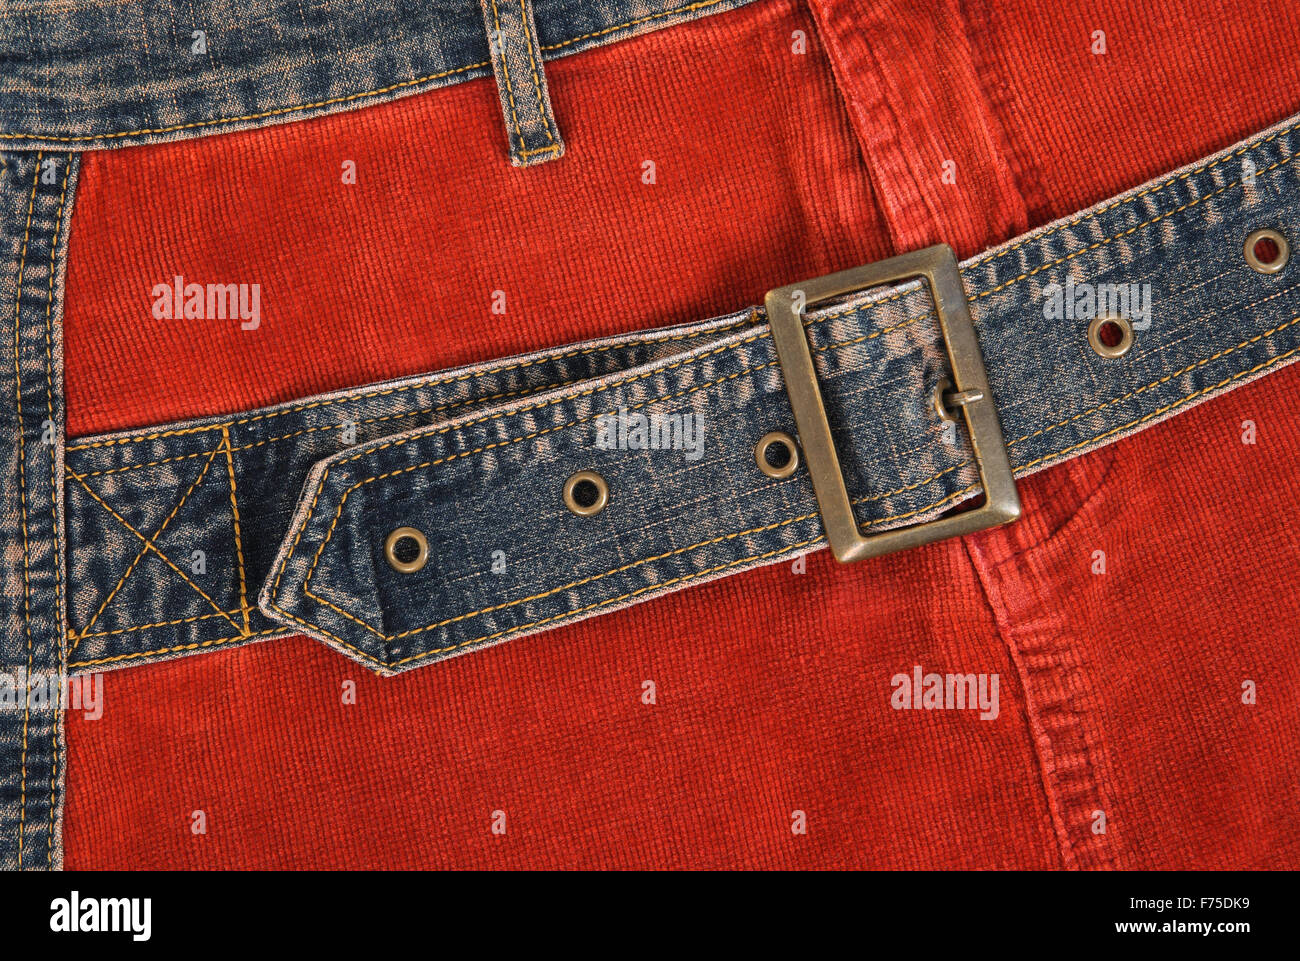 Corduroy clothing with denim belt Stock Photo - Alamy